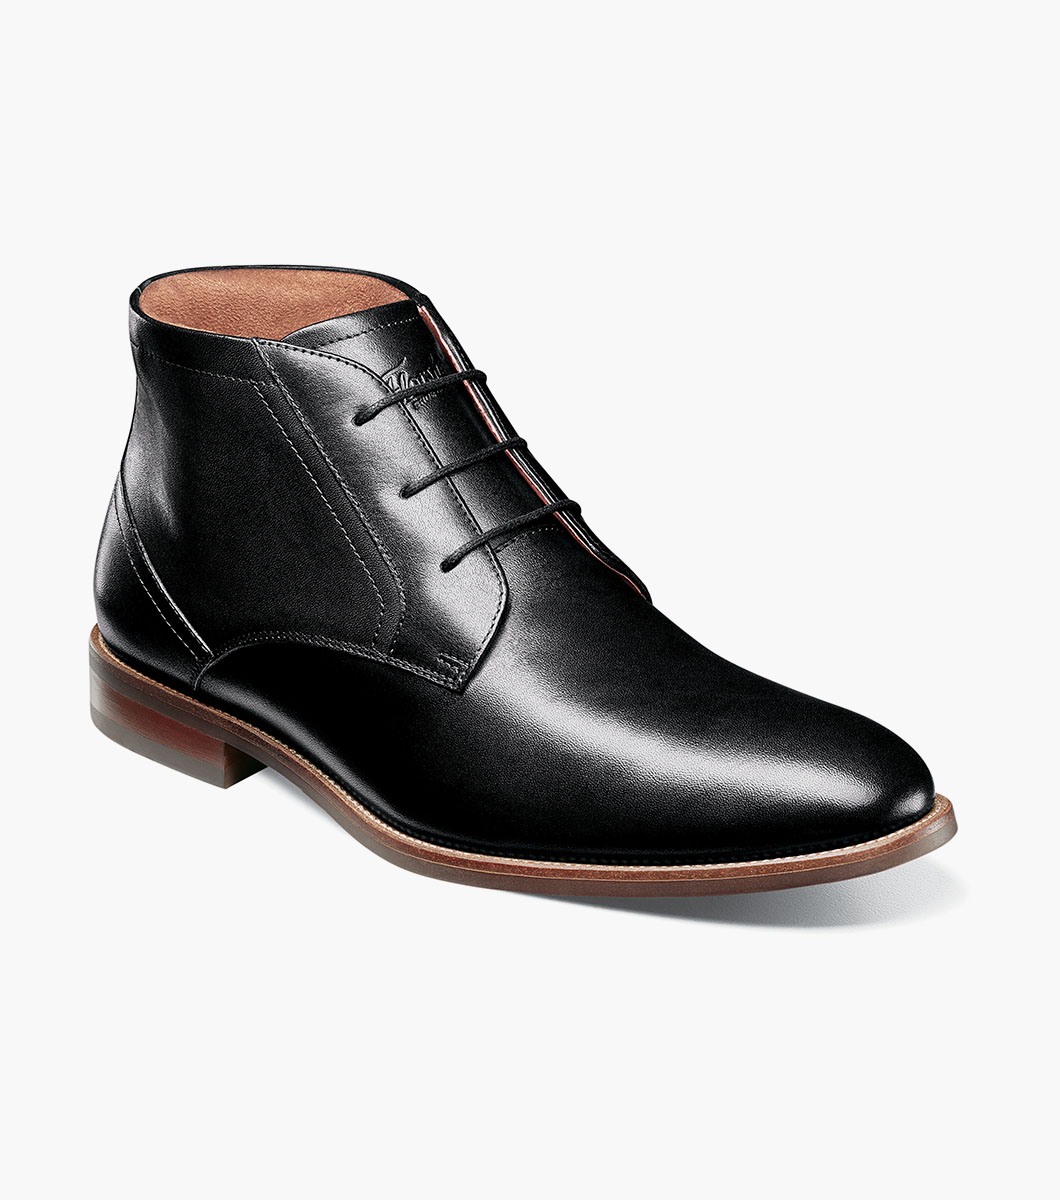 Rucci Plain Toe Chukka Boot Men’s Dress Shoes | Florsheim.com